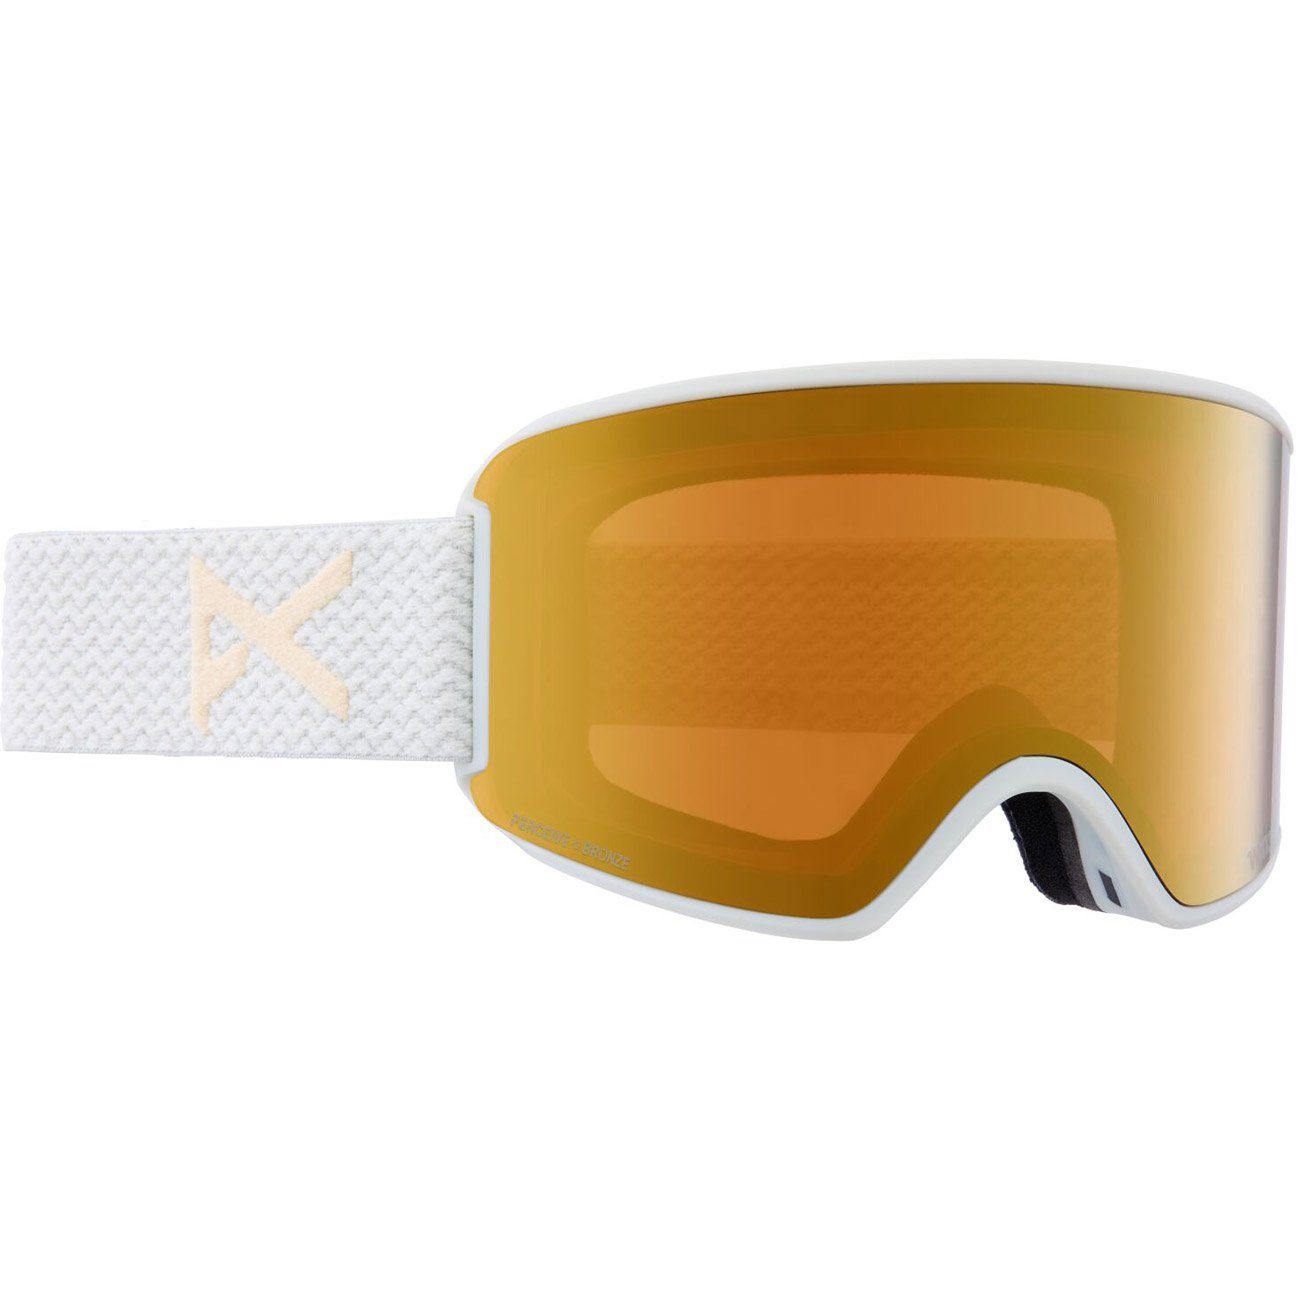 Anon brnz MFI + WM3 BONUS LINSE sun Snowboardbrille, jade/prcv